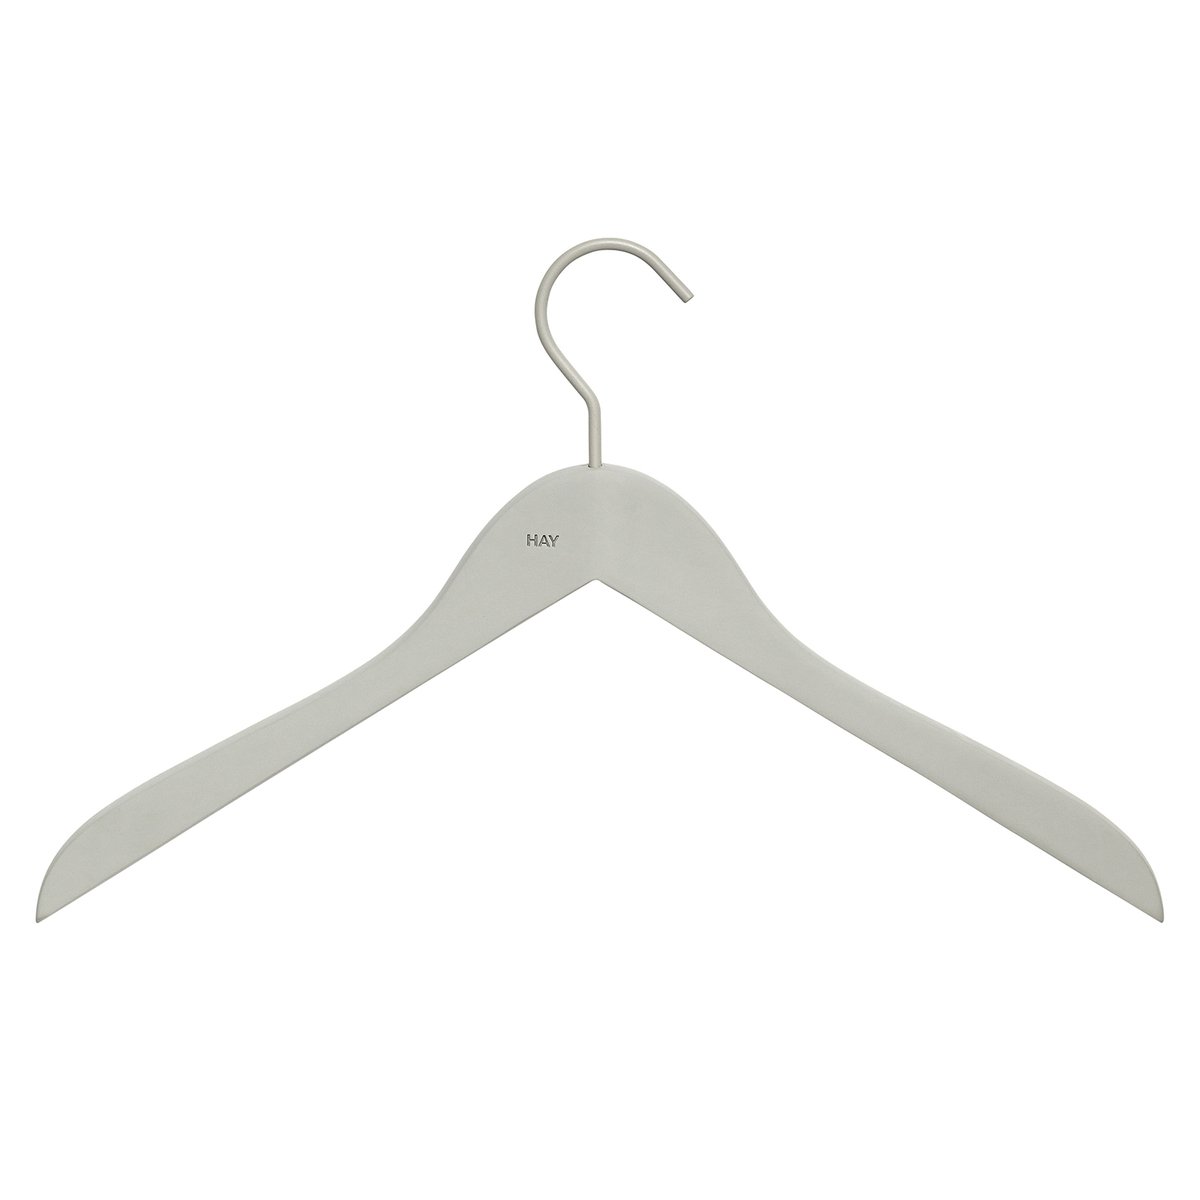 slim clothes hangers